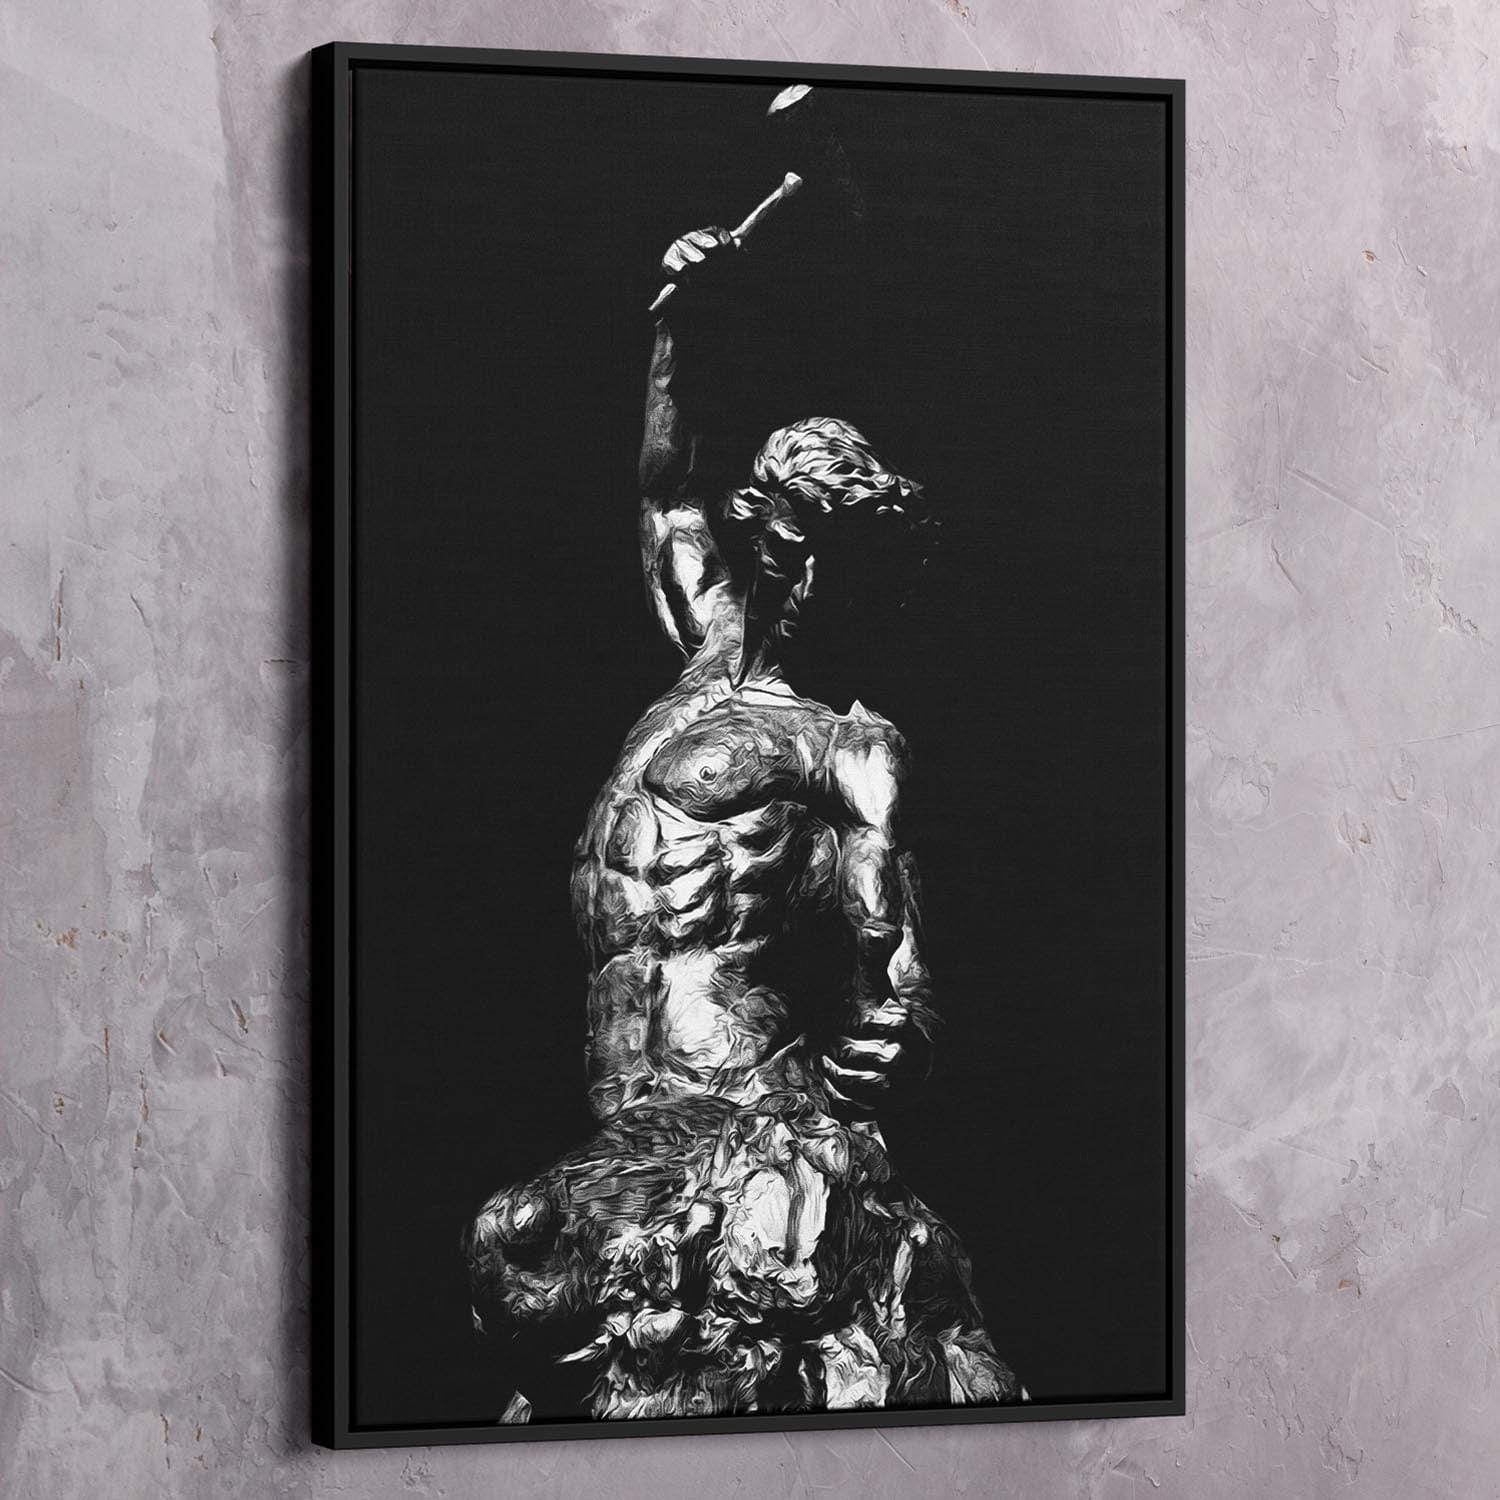 Self Made Man Statue Black White Wall Art | Inspirational Wall Art Motivational Wall Art Quotes Office Art | ImpaktMaker Exclusive Canvas Art Portrait